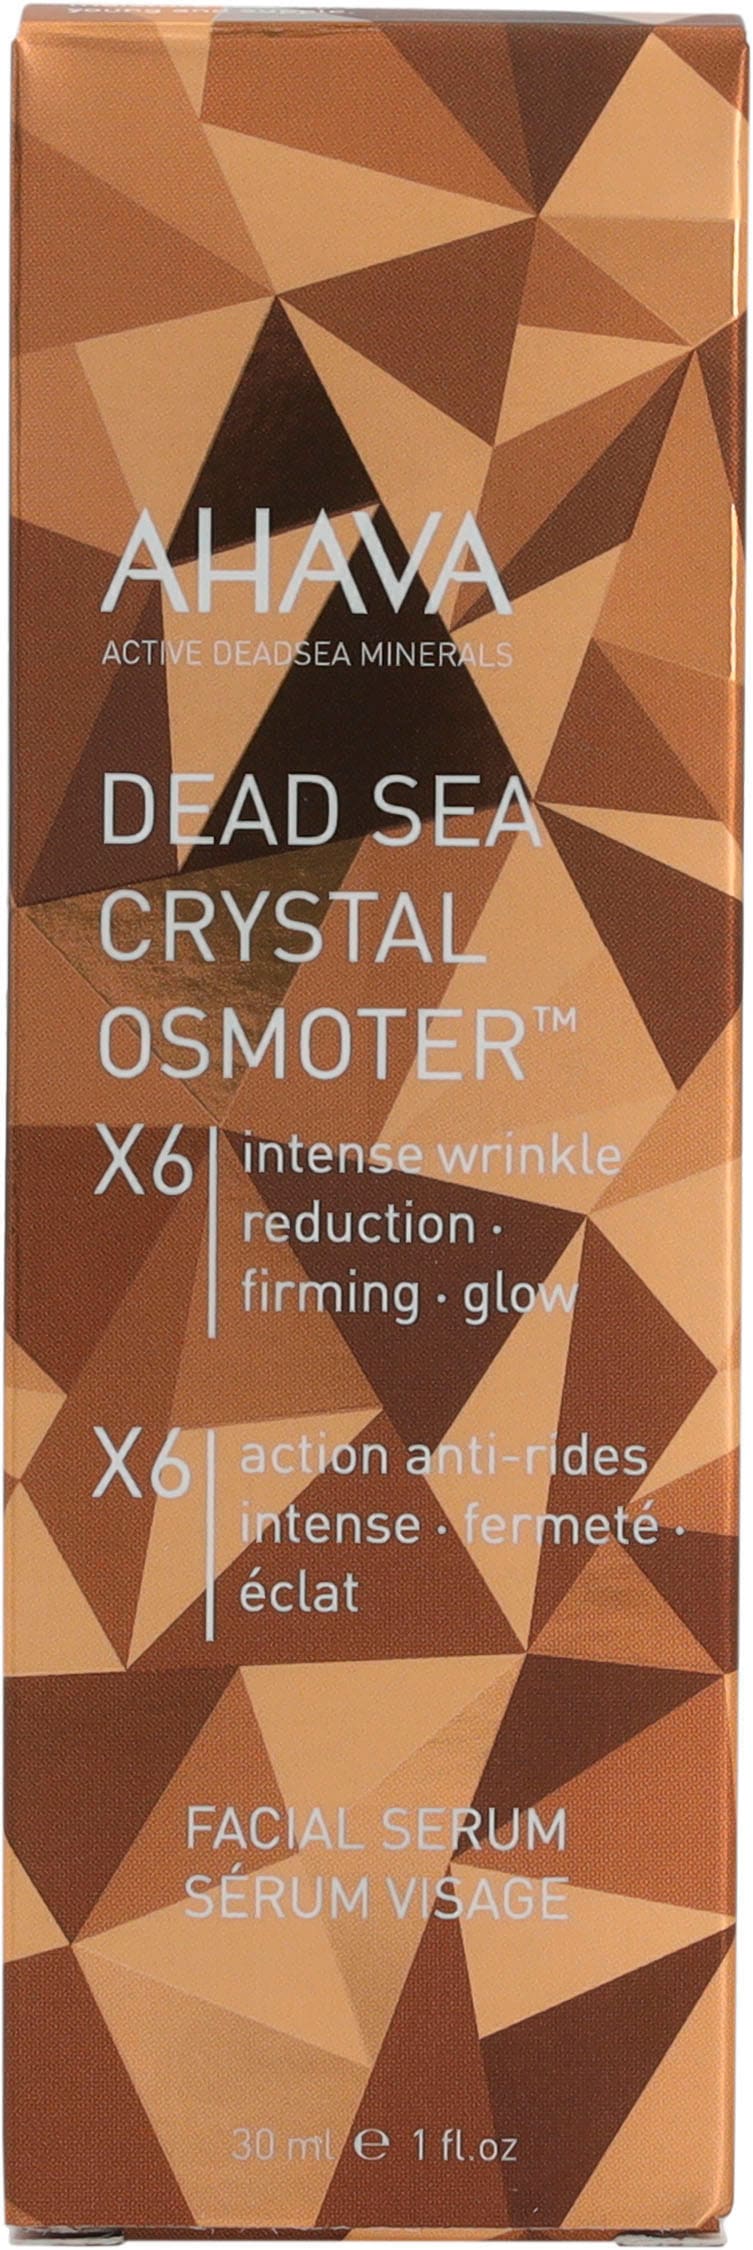 »DSOC AHAVA BAUR Osmoter Crystal Dead Anti-Falten-Serum X6« bestellen Sea online |